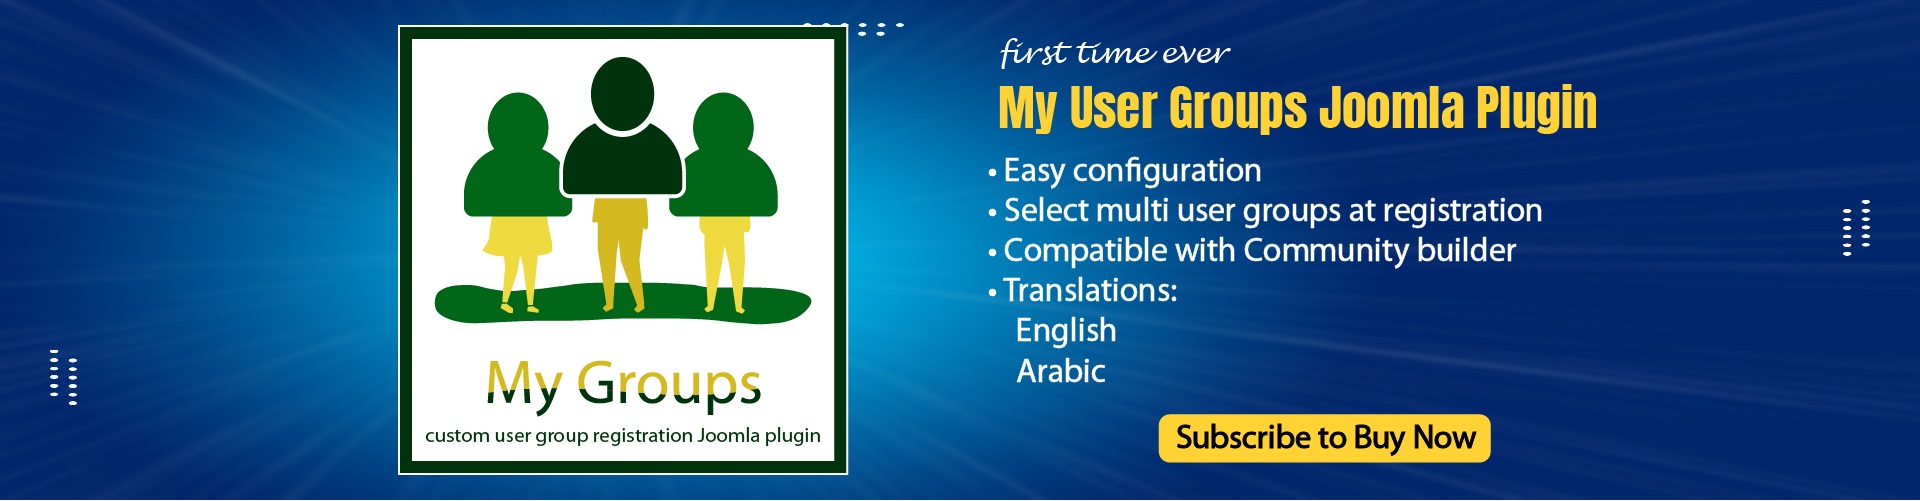 my_user_groups_joomla_plugin.jpg